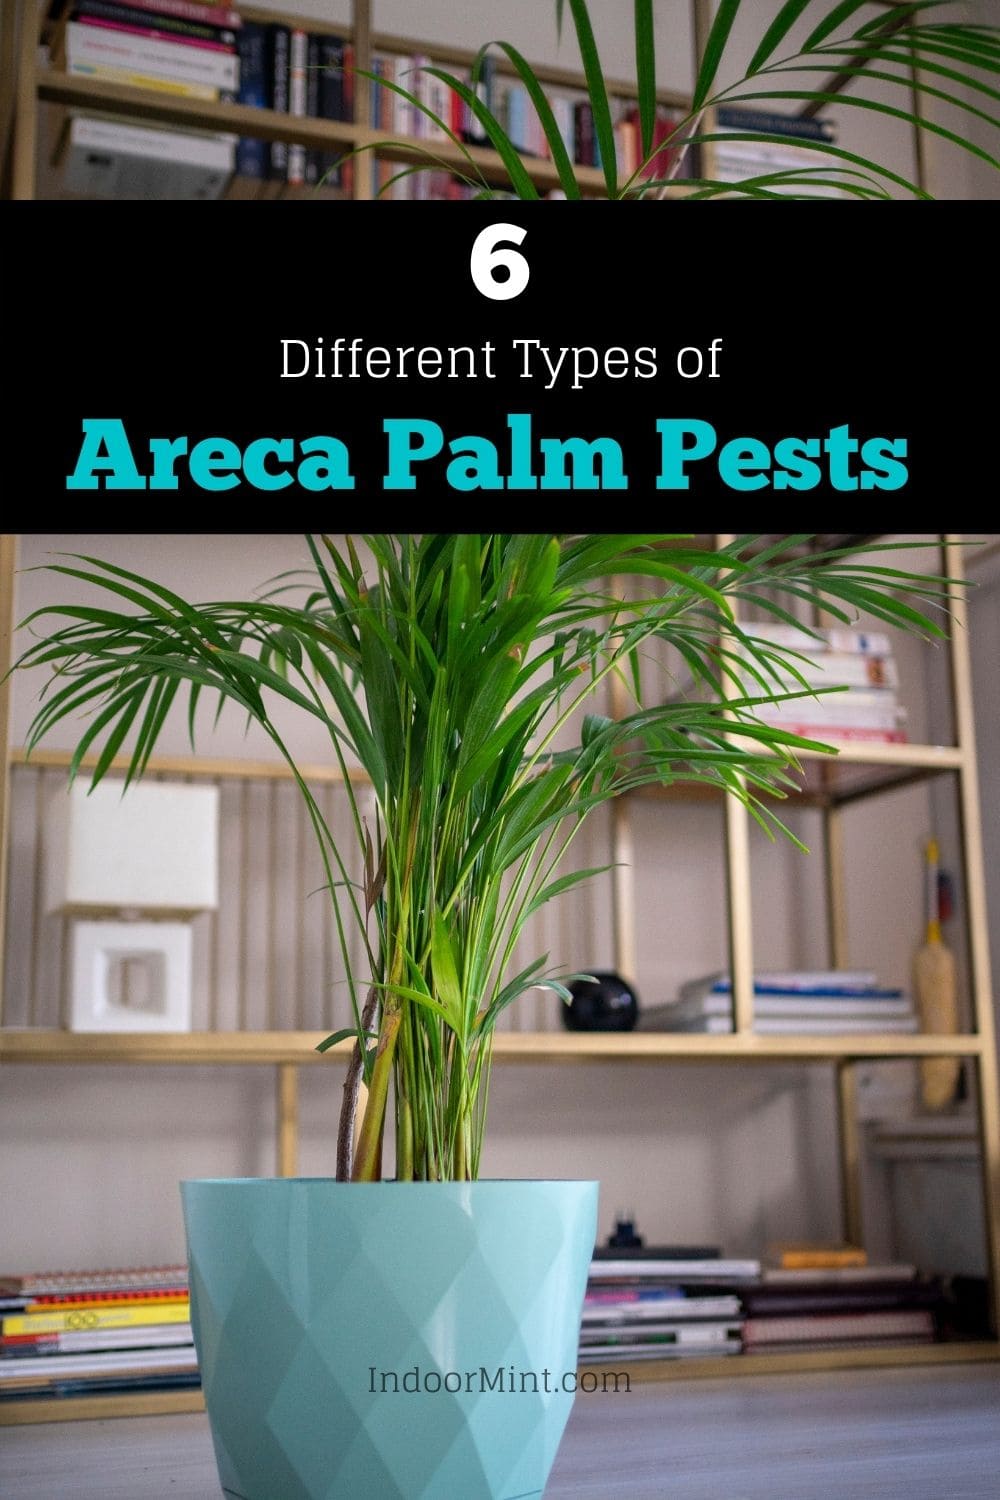 areca palm pests guide cover image